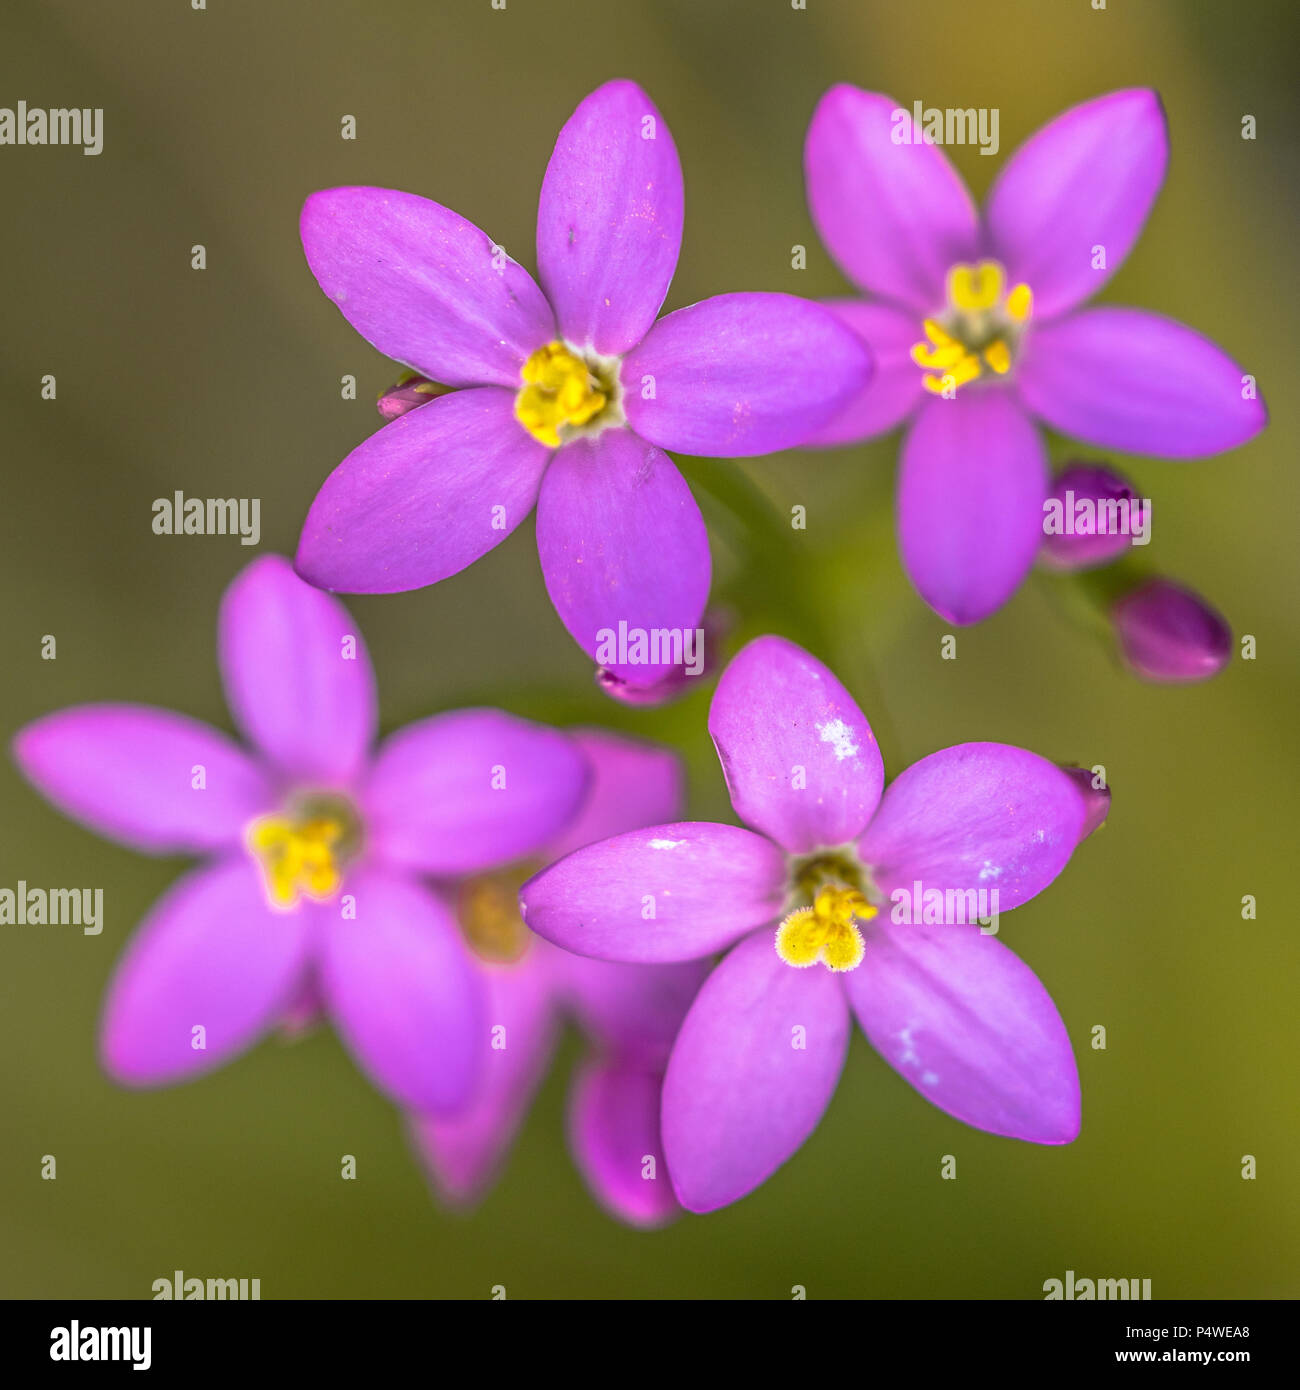 Four Centaurium flowers (Centaurium littorale) close up with green background Stock Photo